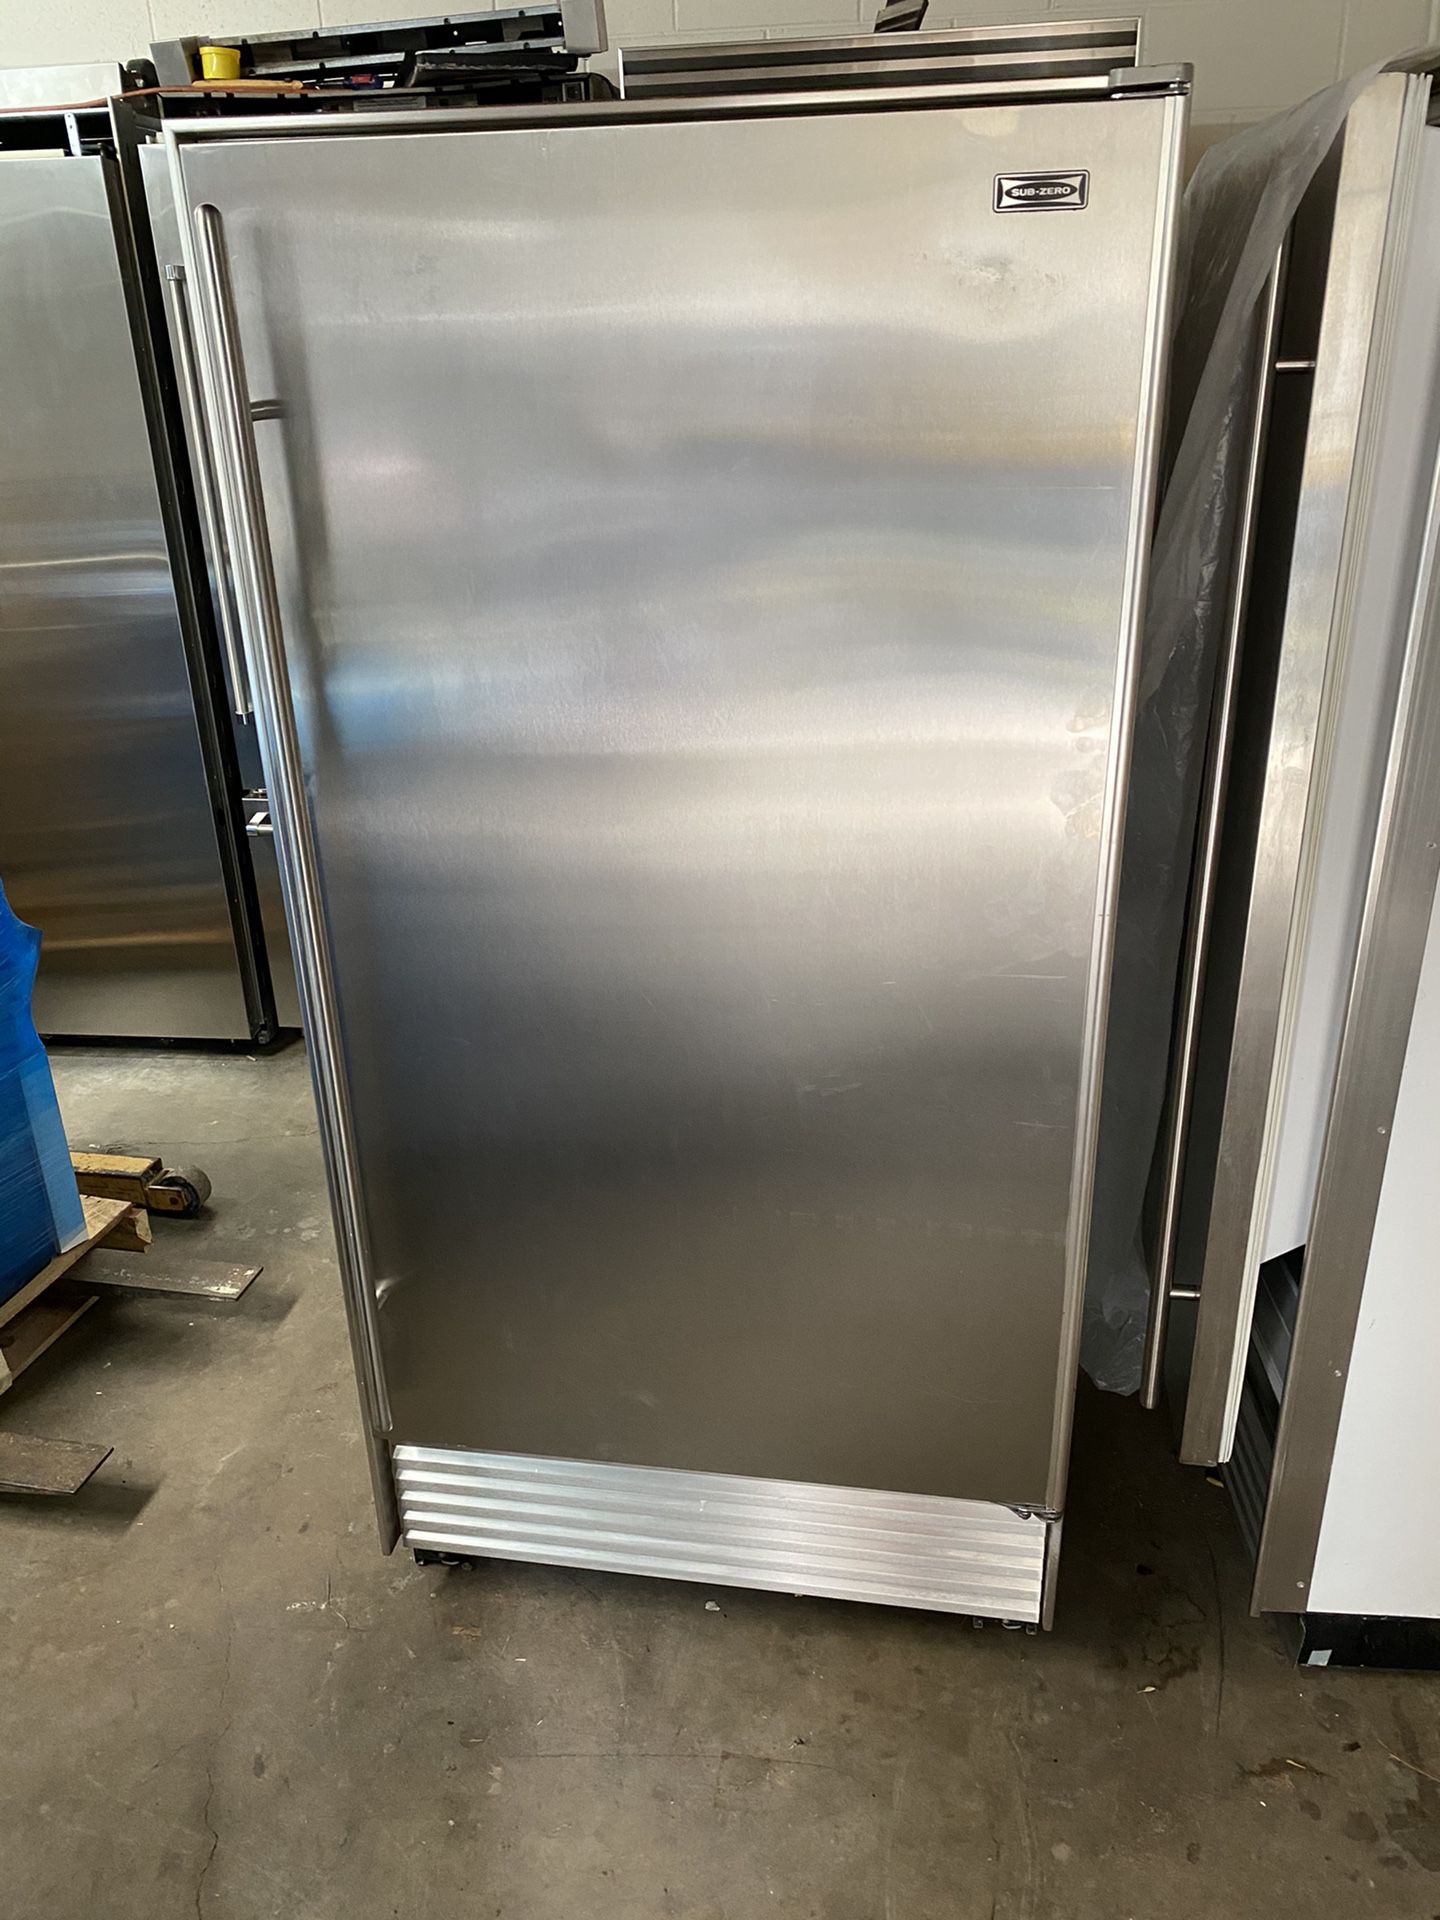 Sub zero 601R 36” all fridge refrigerator. Timeless stainless steel design, quality subzero built. Working perfectly.